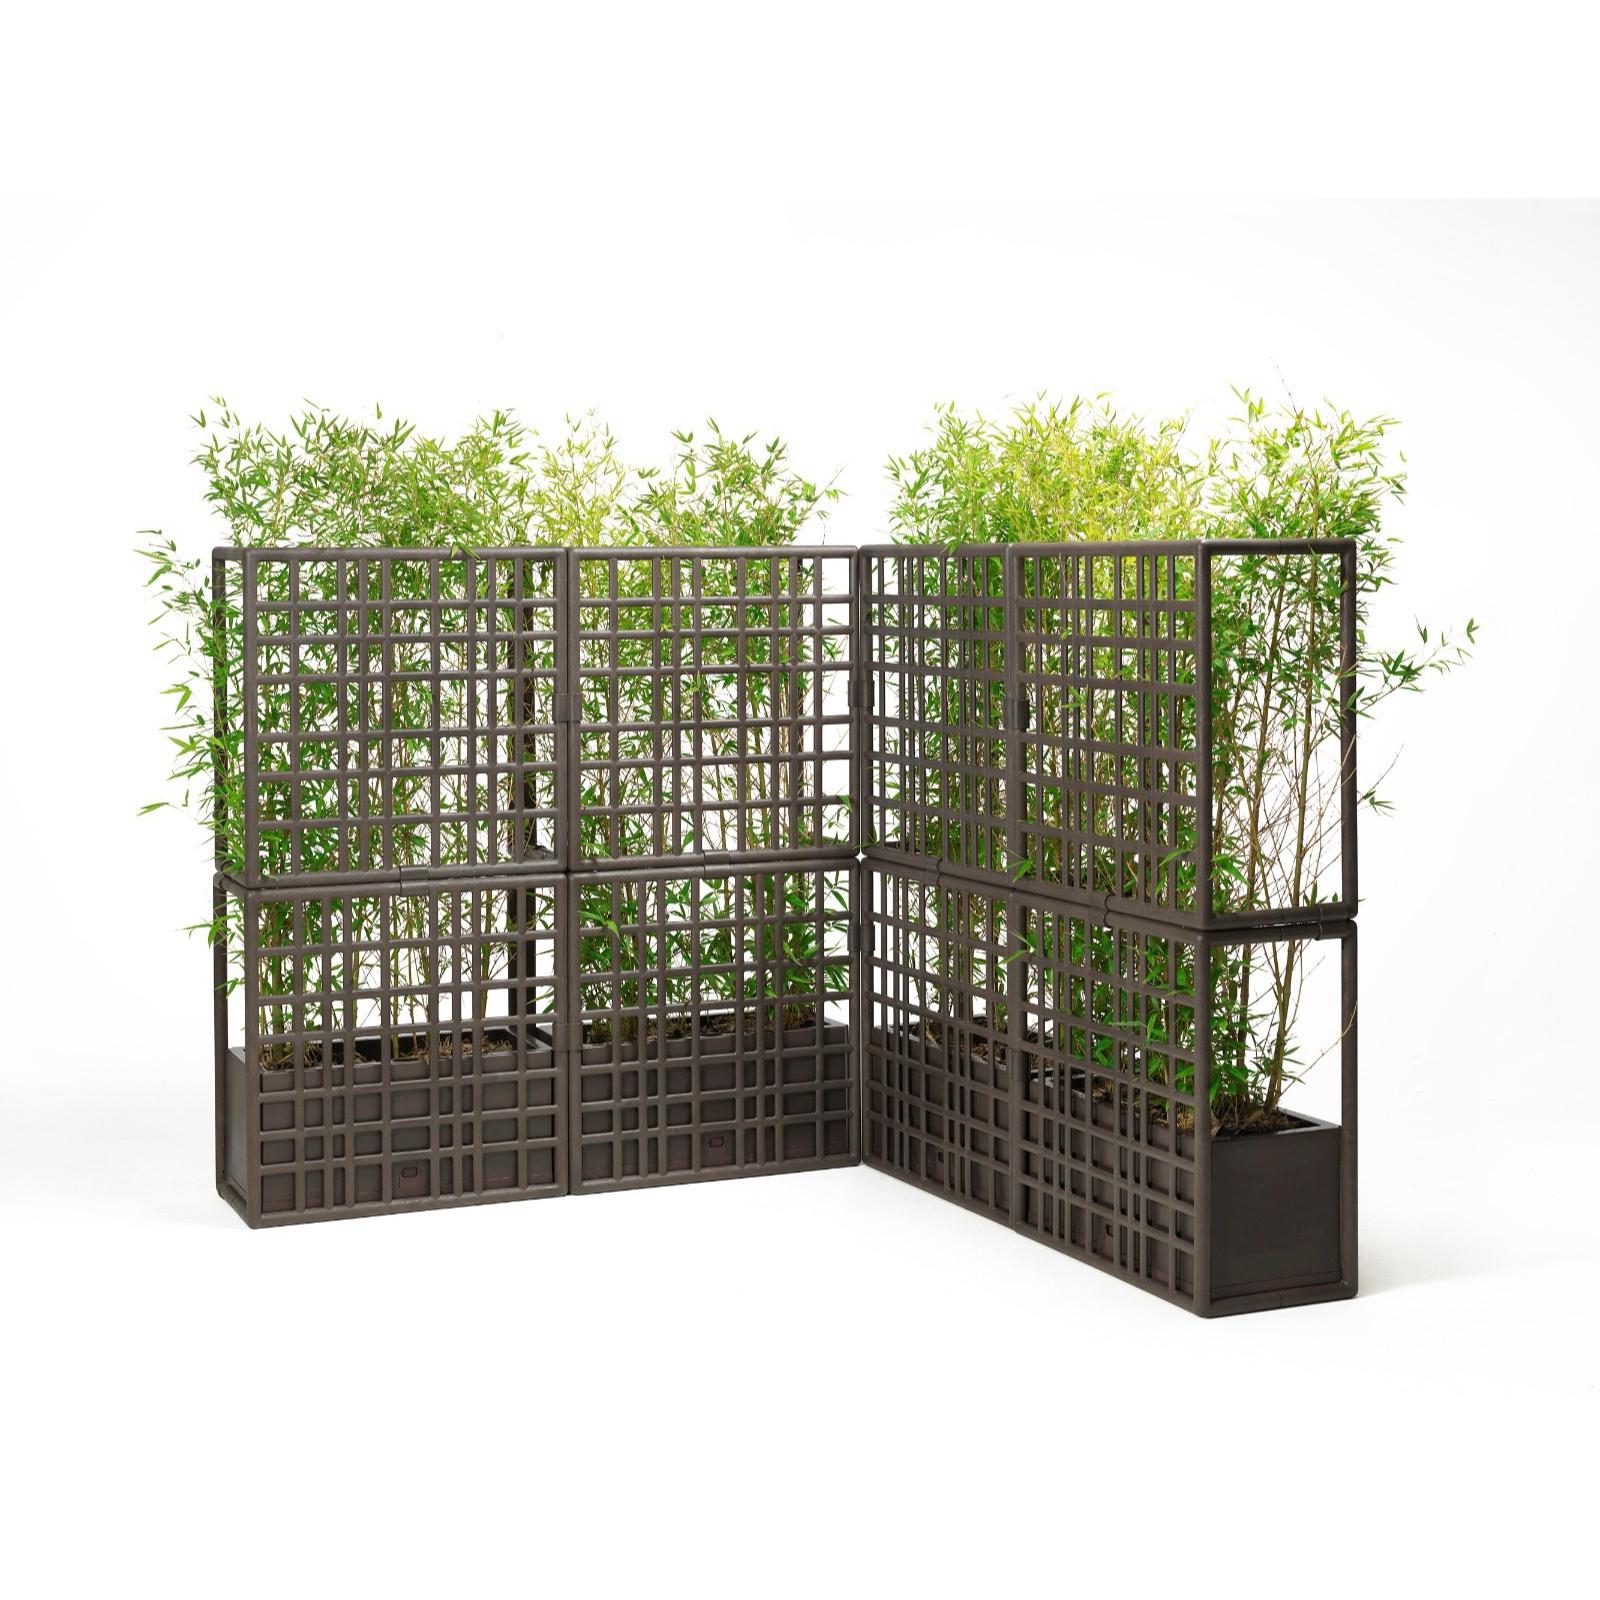 NARDI SIPARIO Planter - Garden Space Divider - Medium [140 cm Tall]